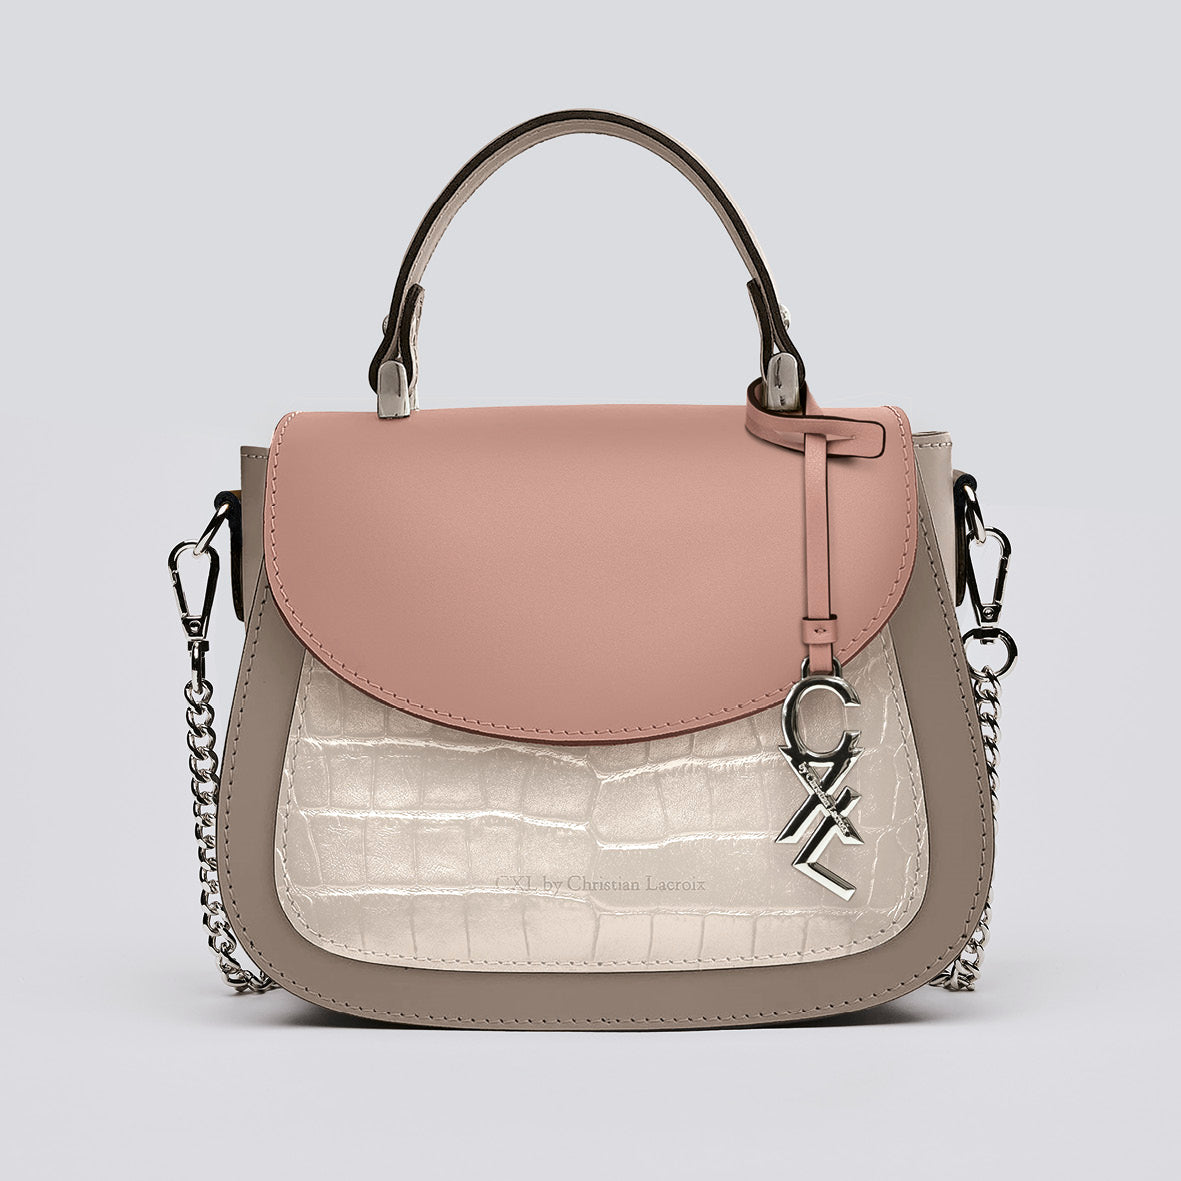 Leather handbag in croco leather - Haussmann